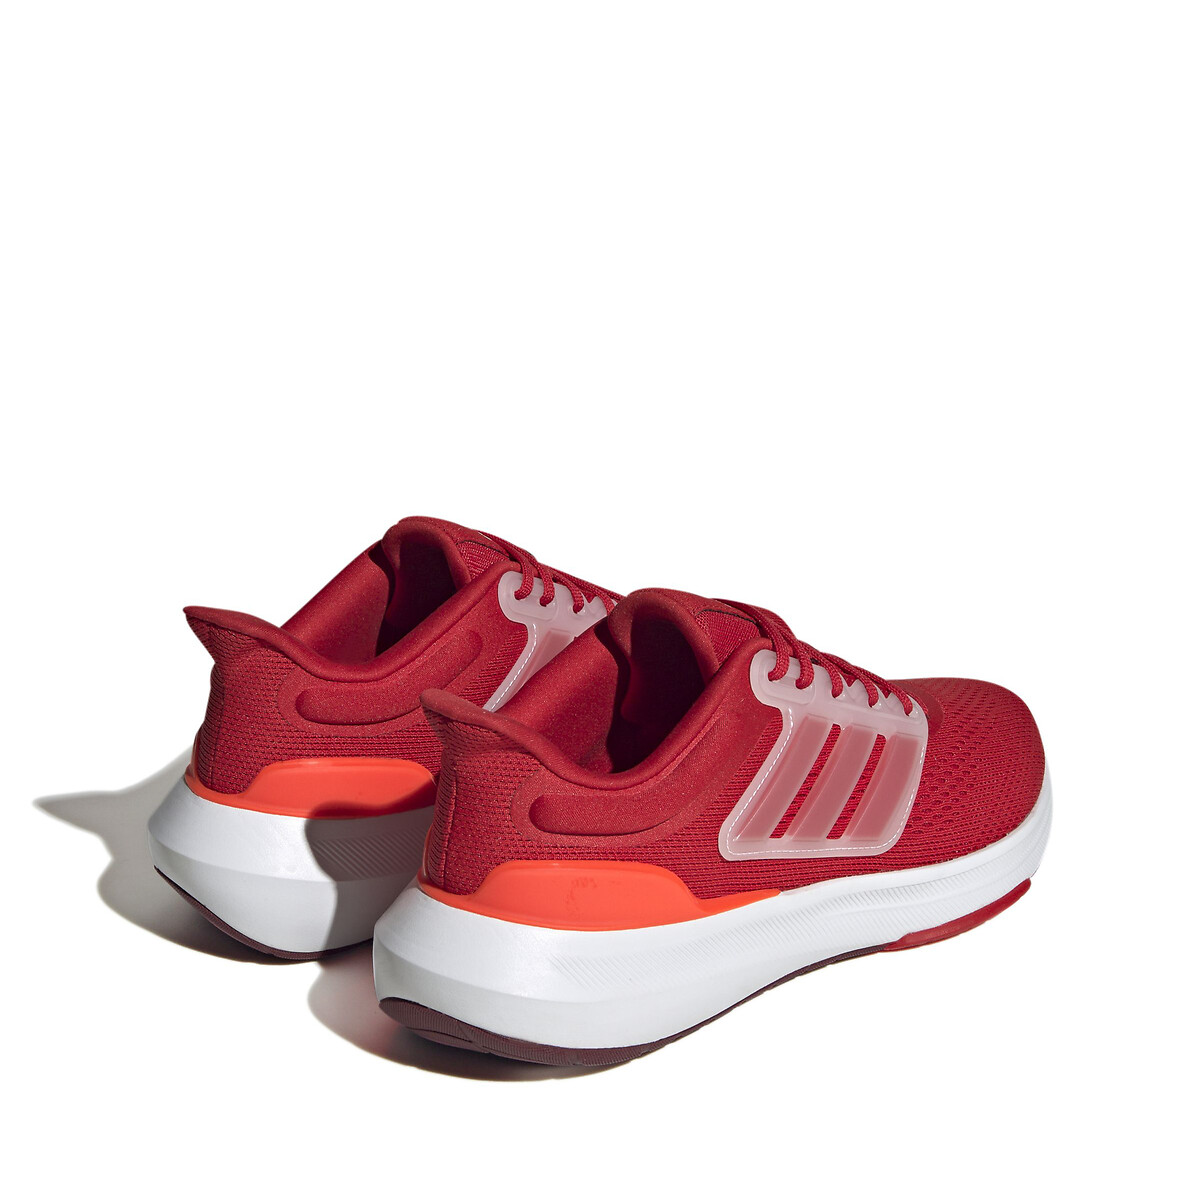 Zapatillas ultrabounce rojo Adidas La Redoute